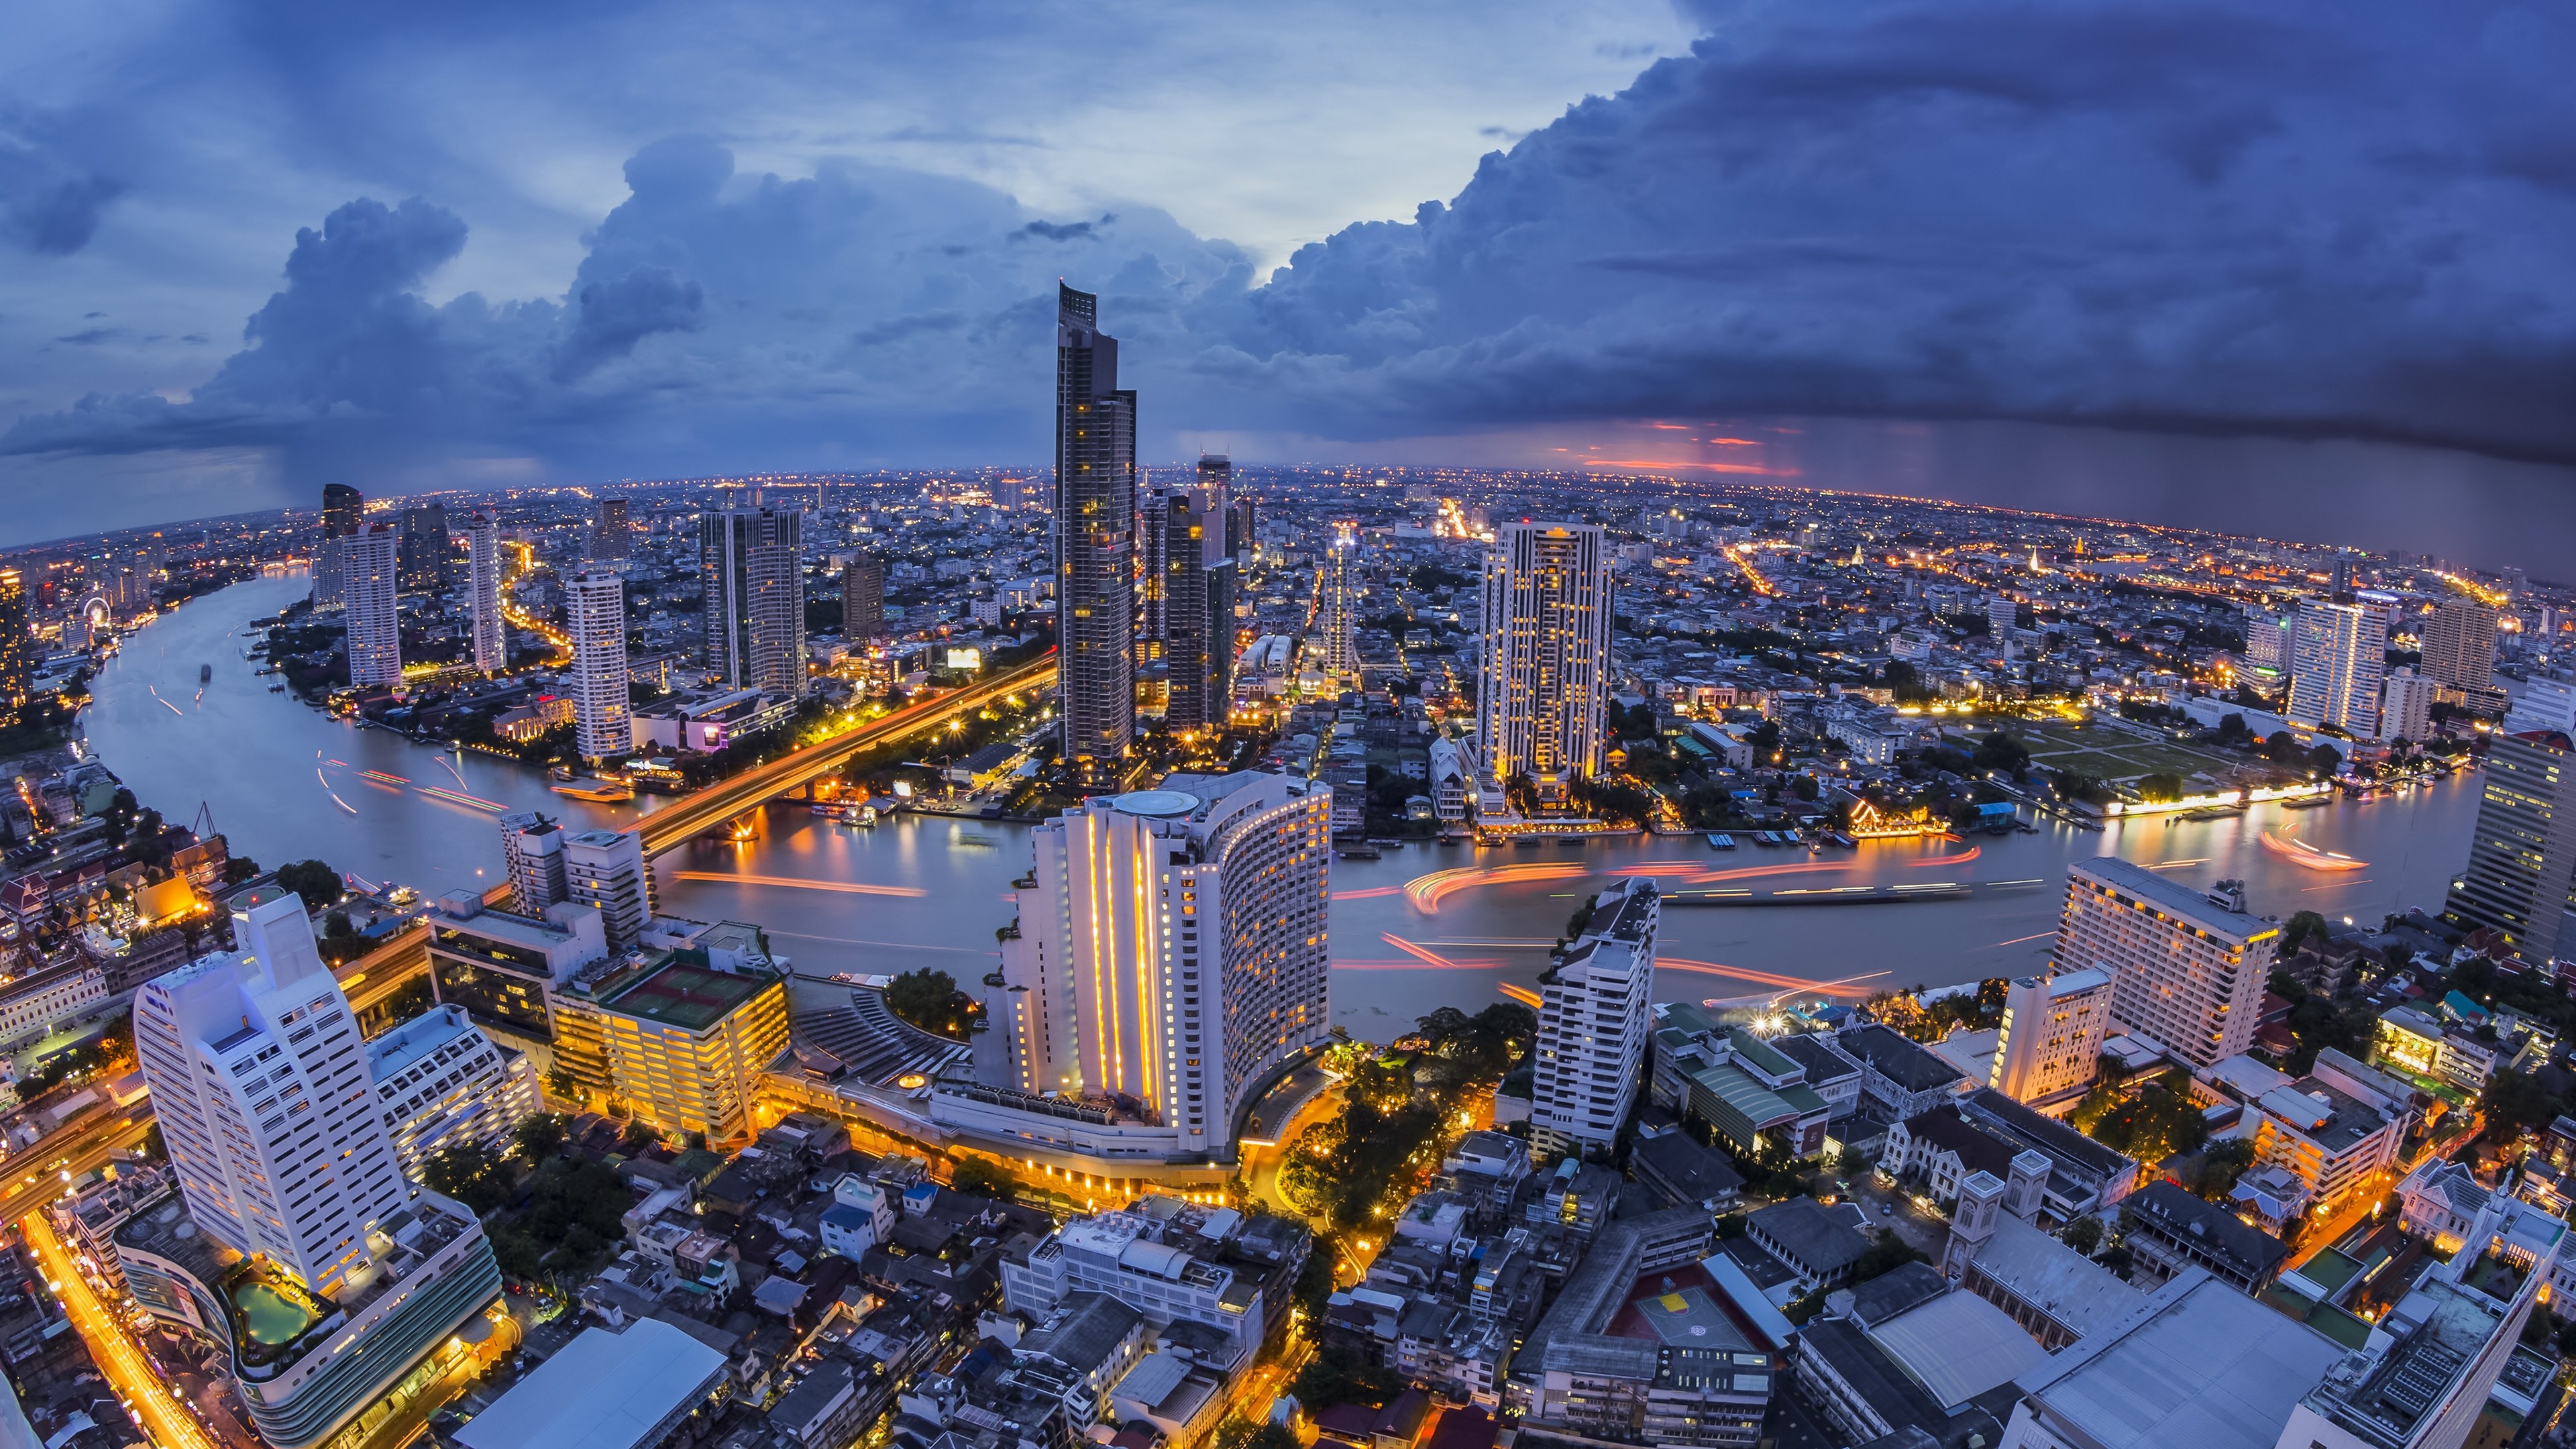 8k Bangkok Images